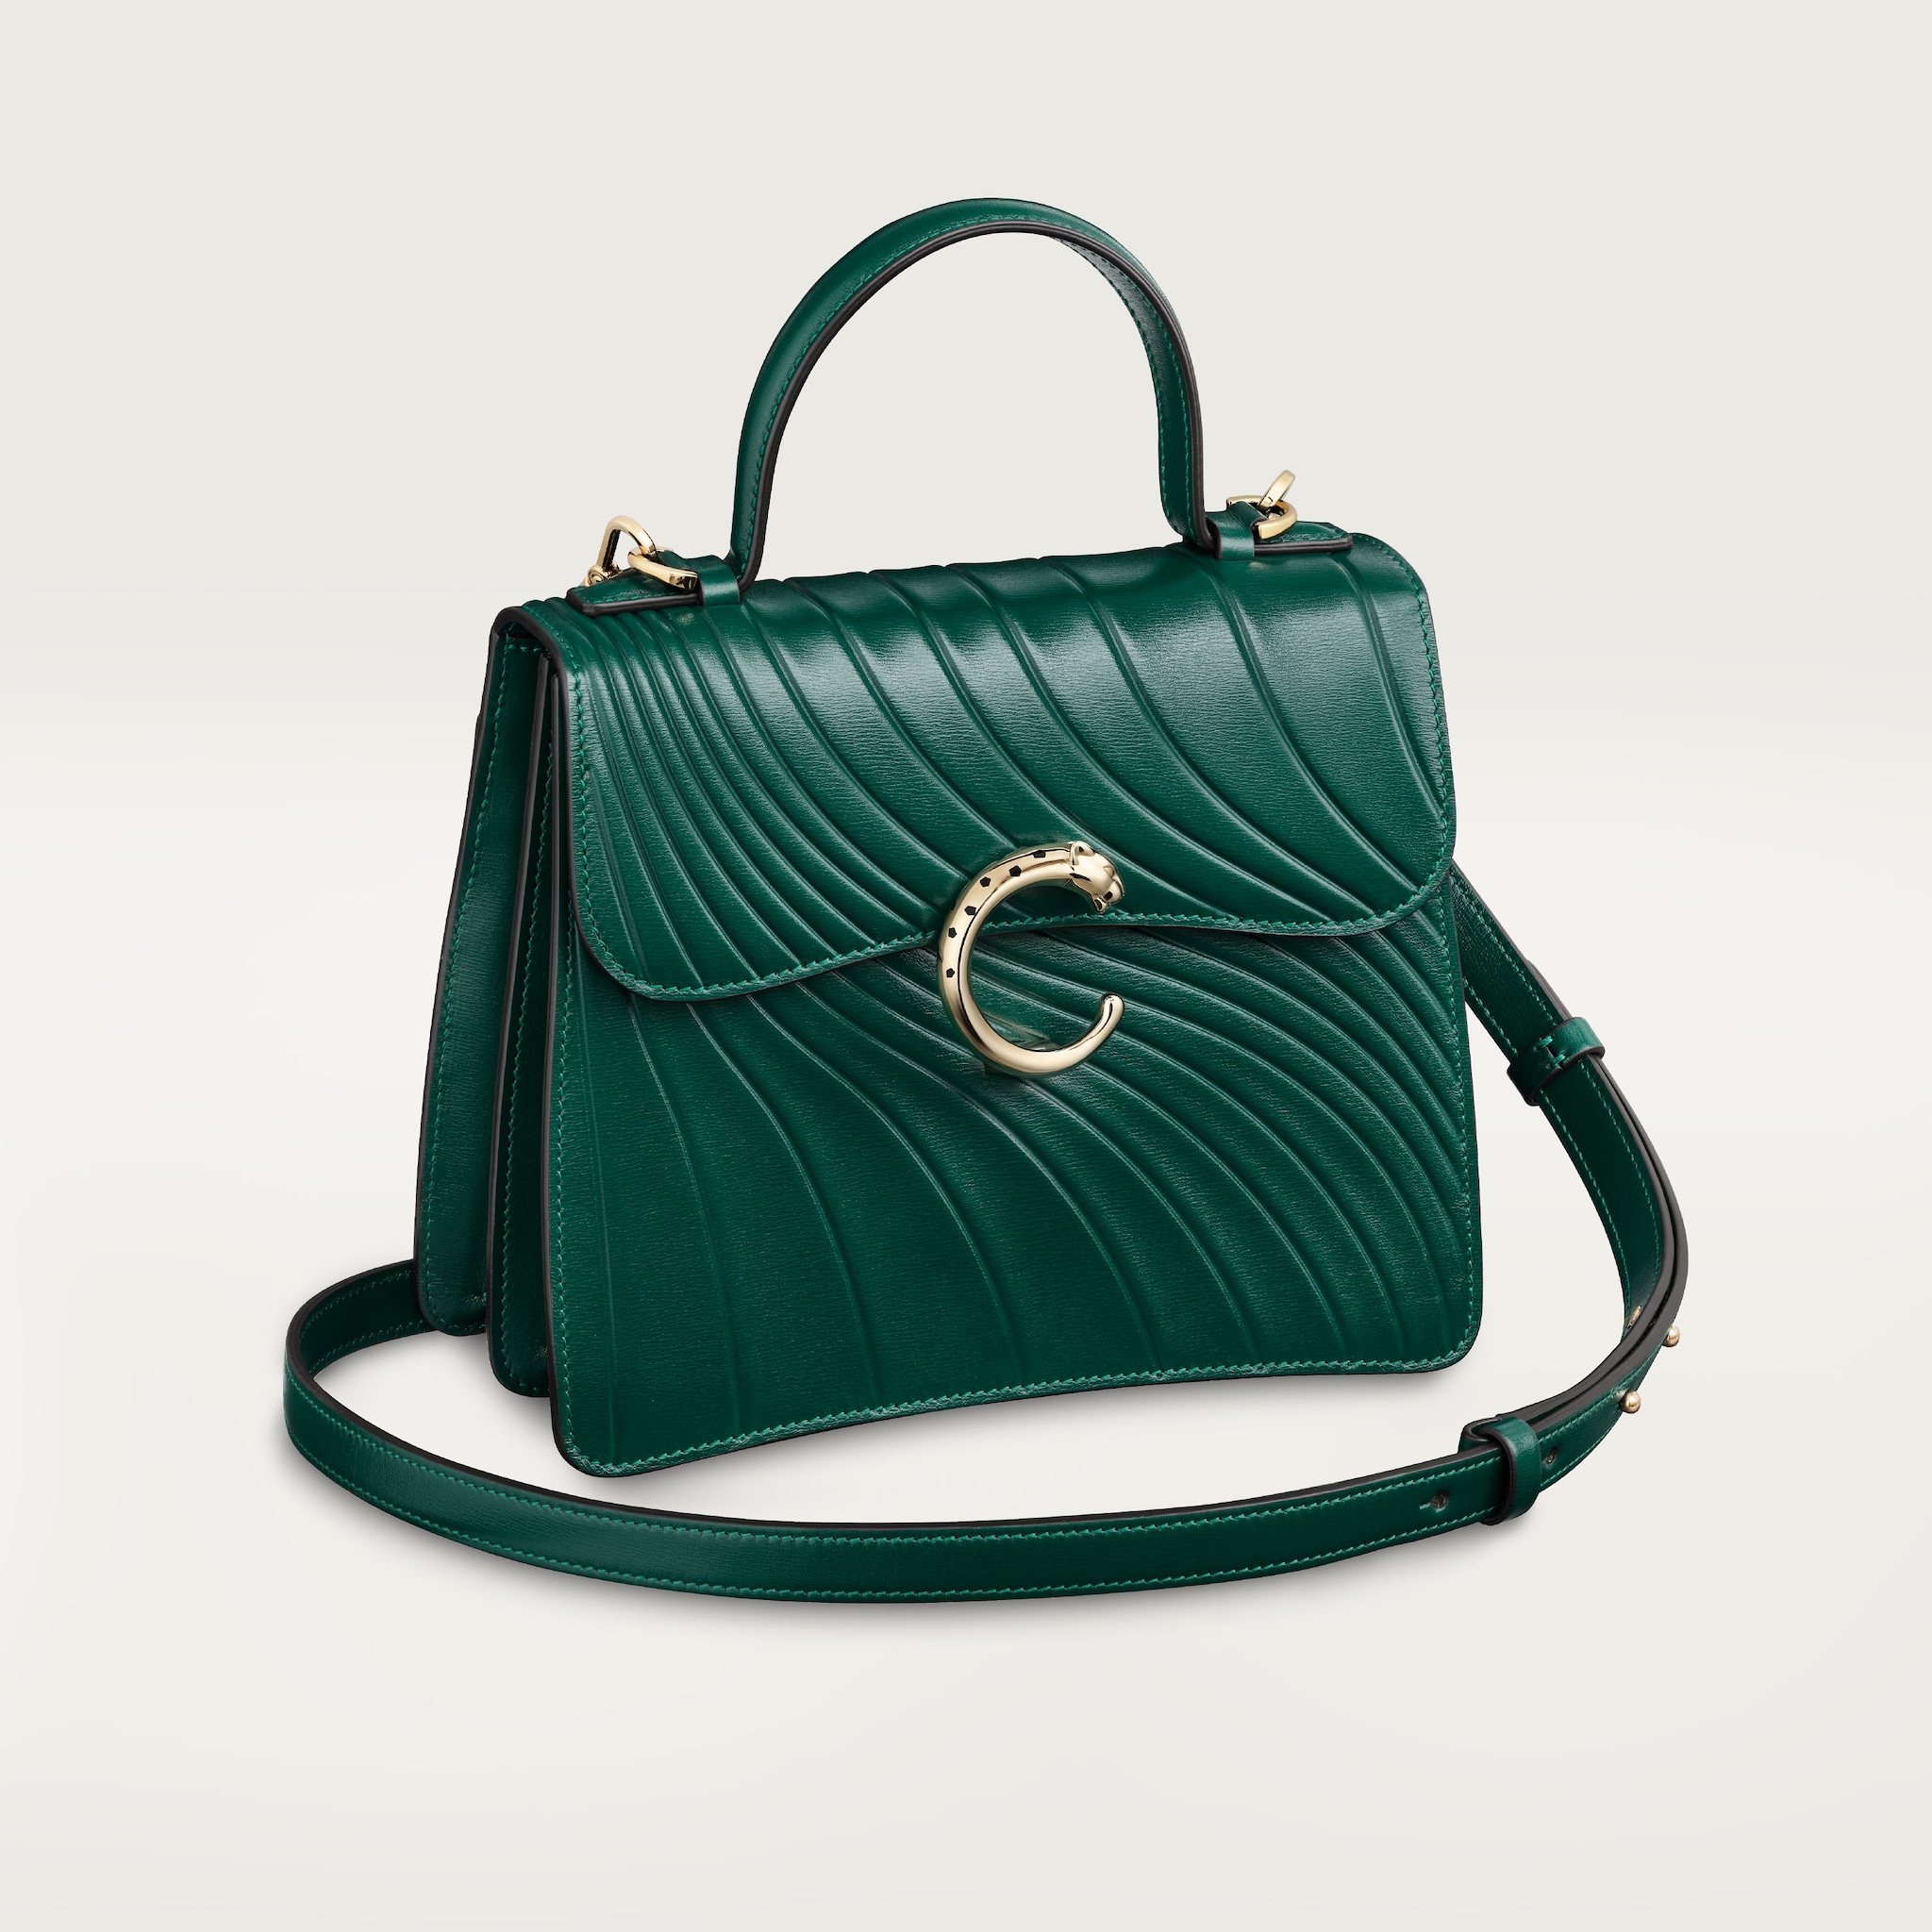 Handle bag mini model, Panthère de CartierEmerald green calfskin, embossed Cartier signature motif, golden finish